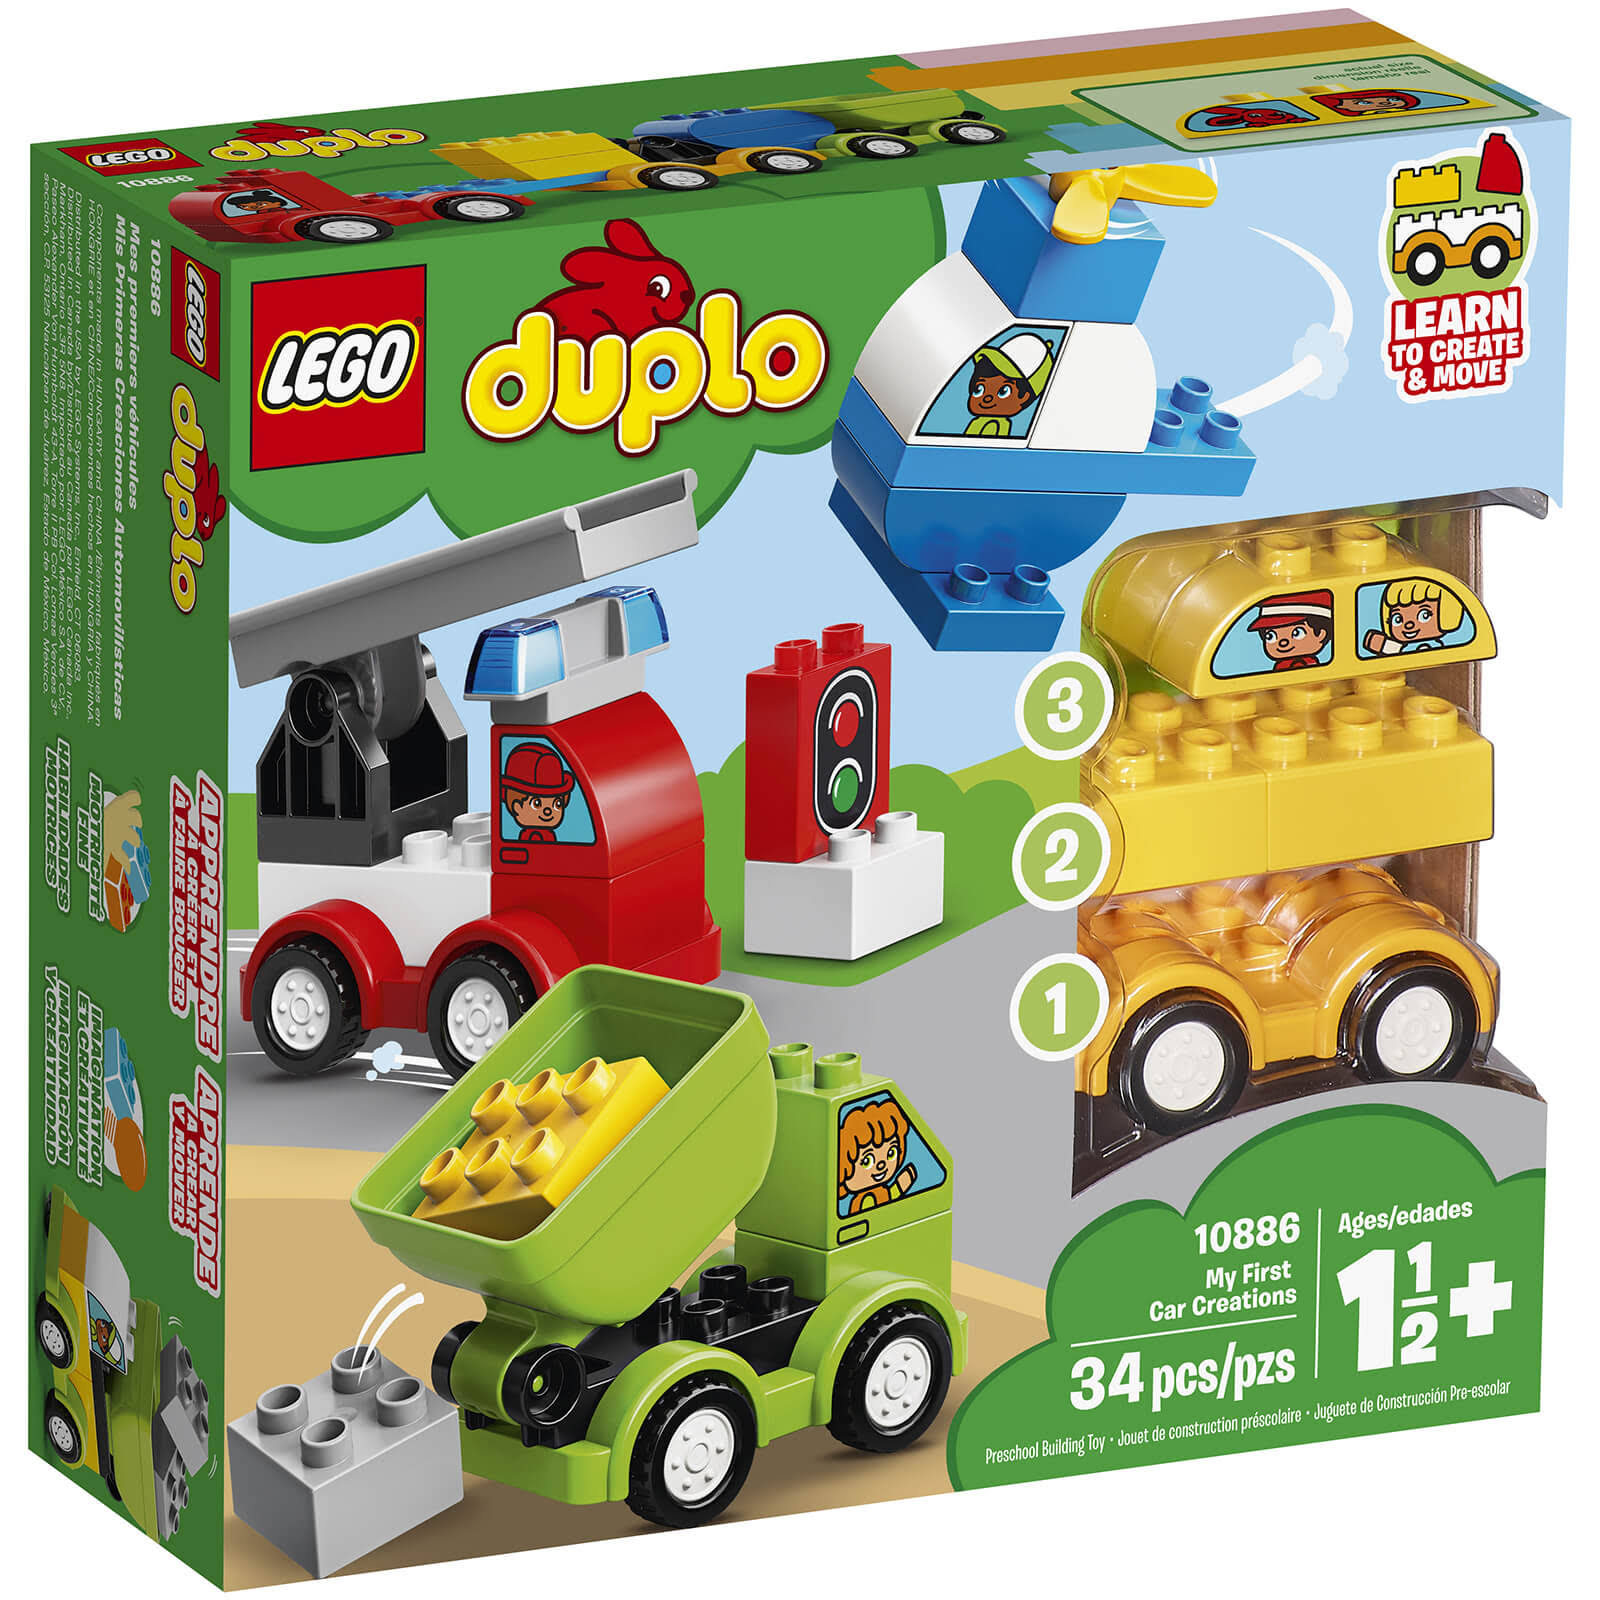 LEGO DUPLO My First Car Creations - 10886